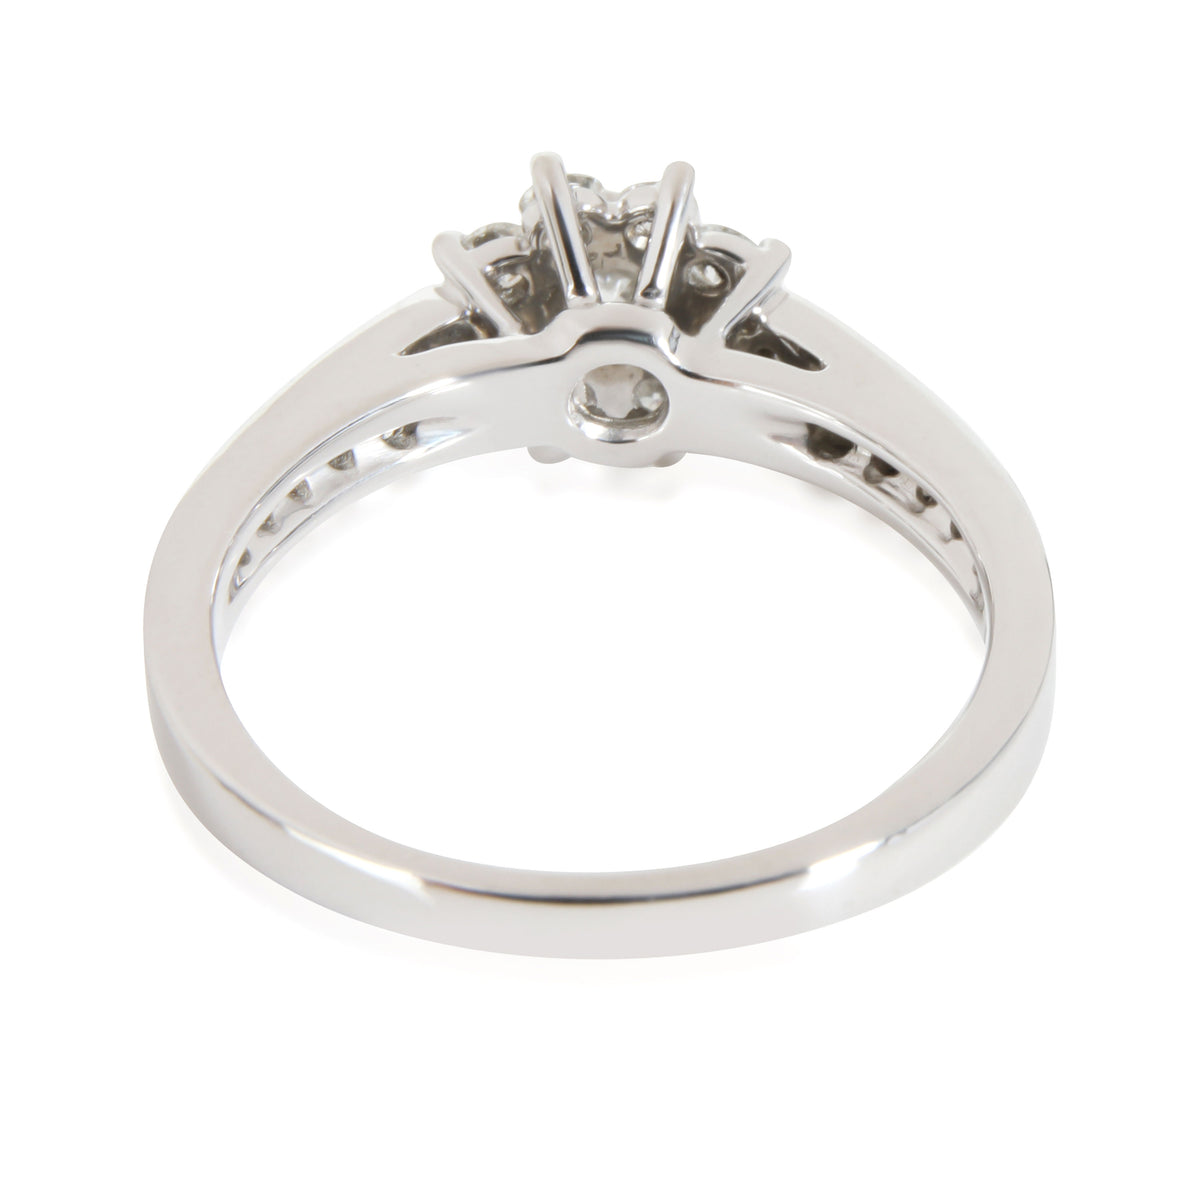 Tiffany & Co. Flower Diamond Ring in Platinum 0.75 CTW